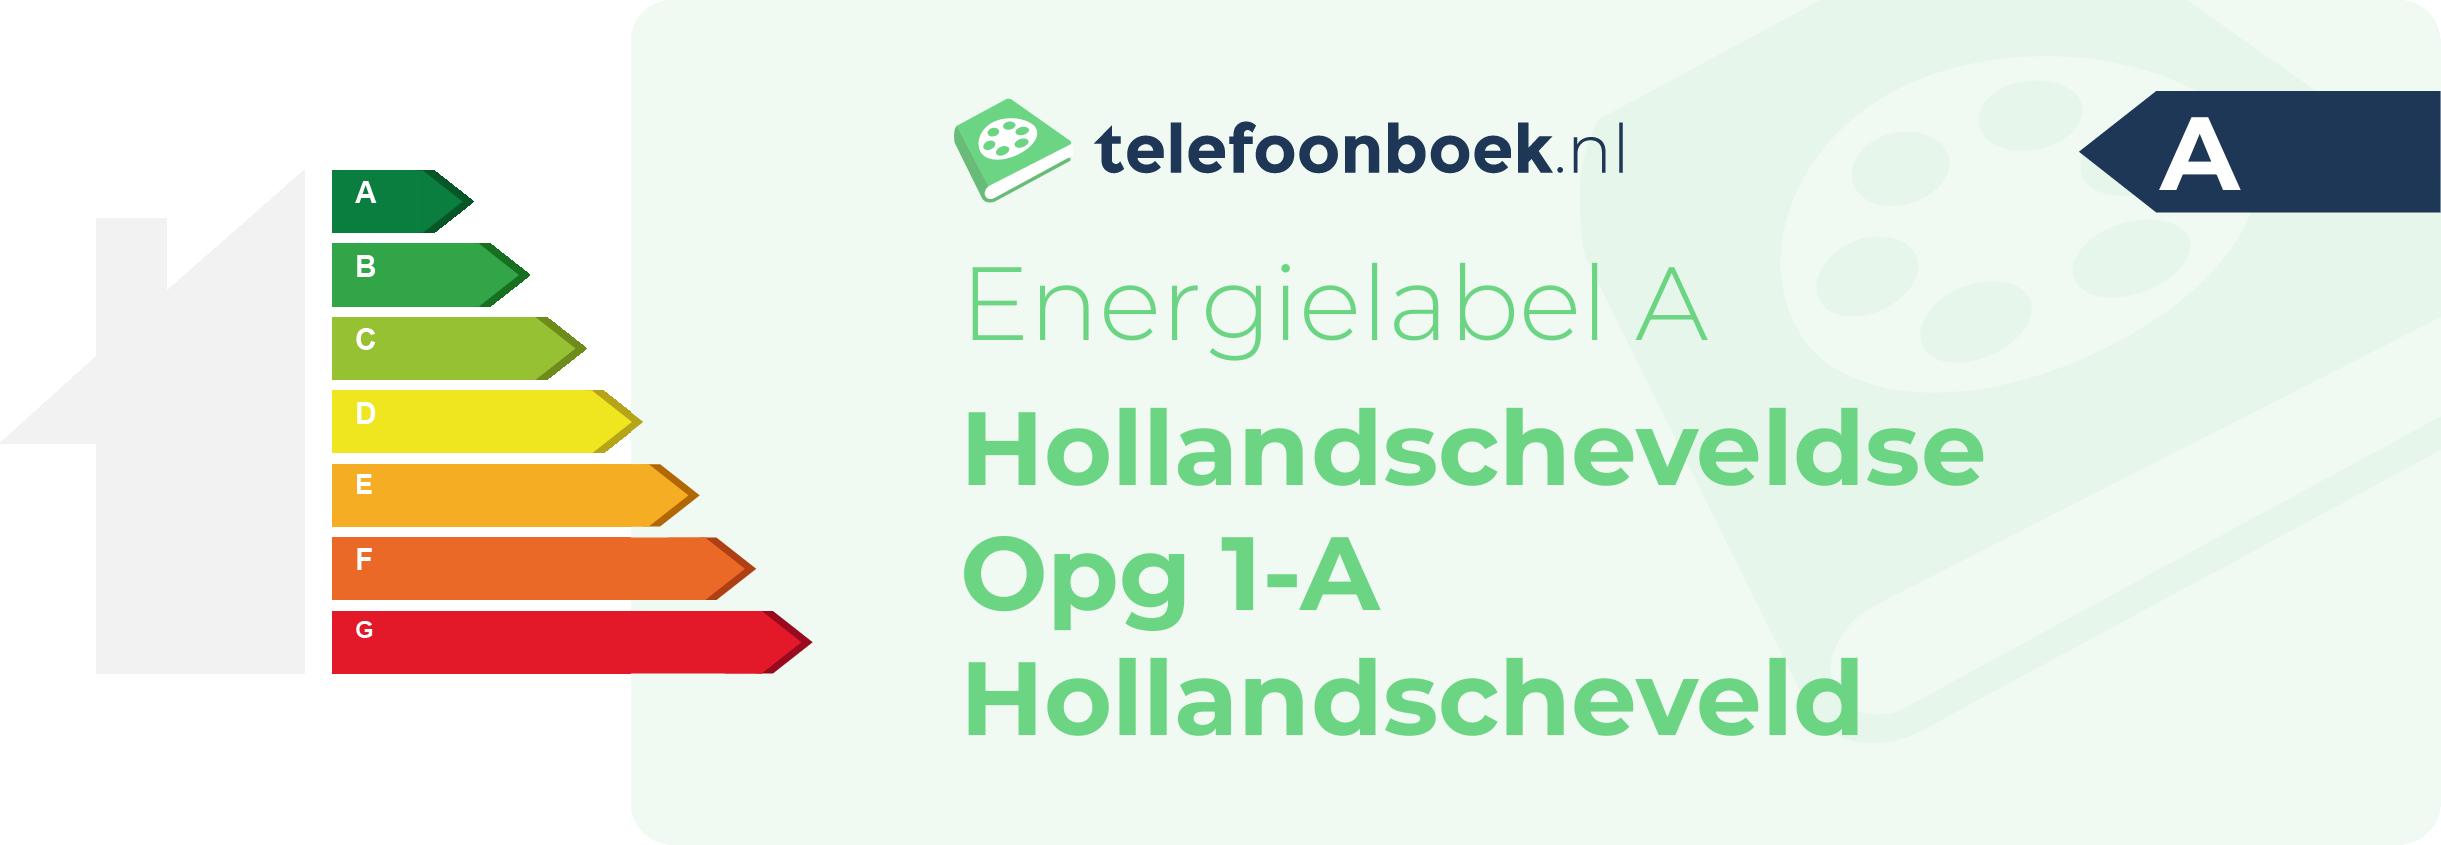 Energielabel Hollandscheveldse Opg 1-A Hollandscheveld